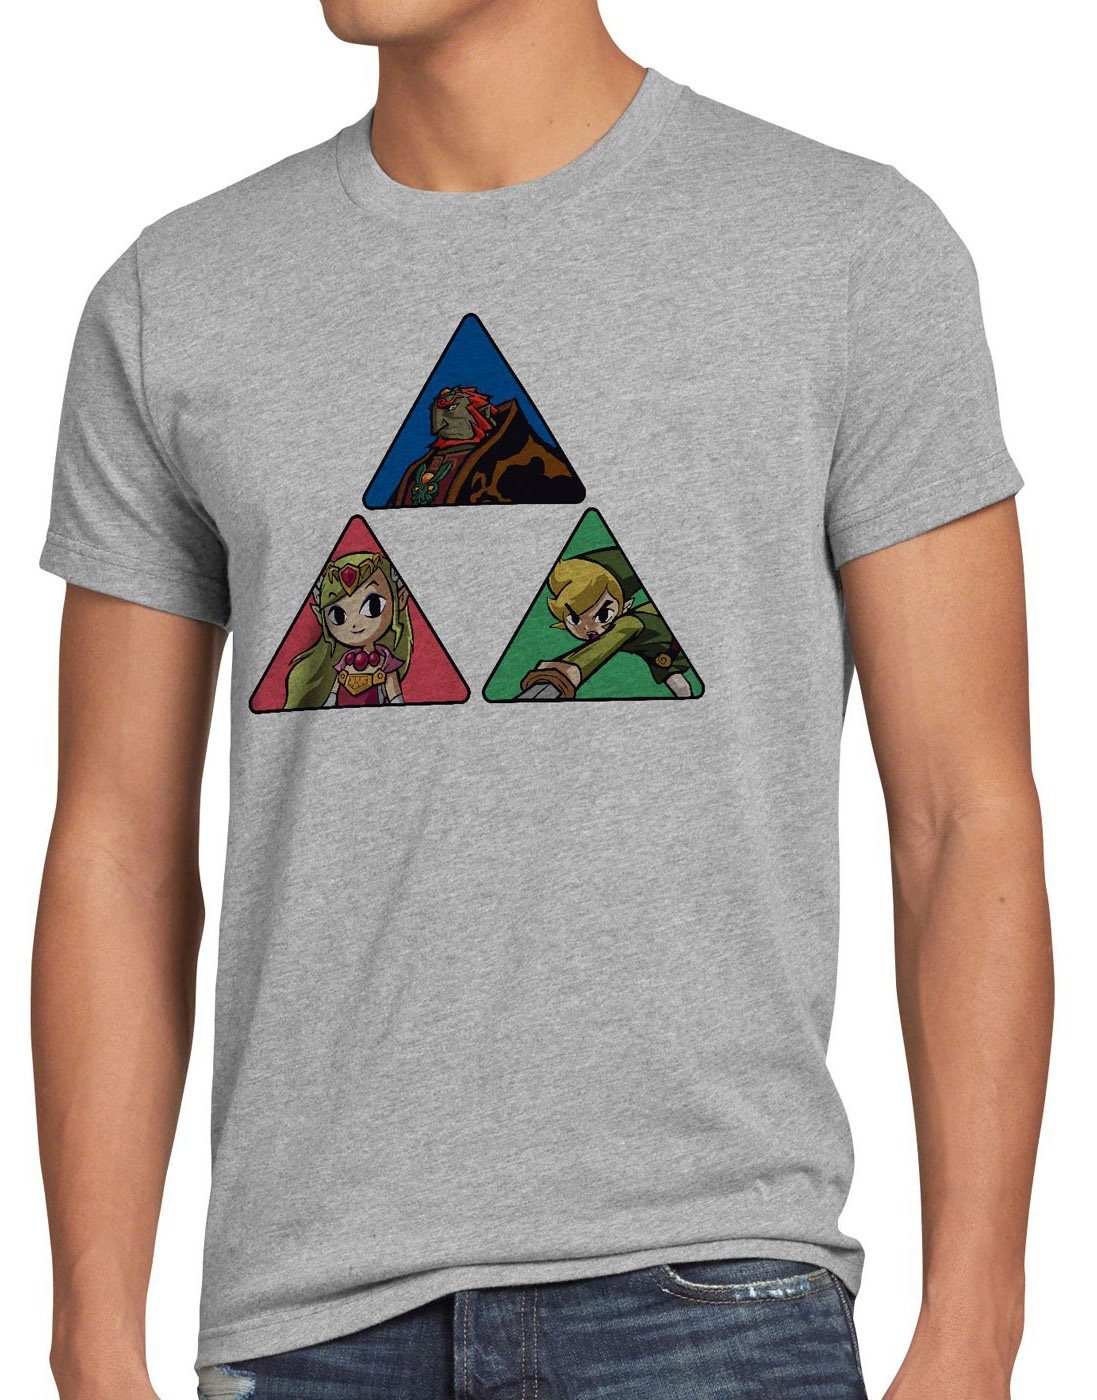 style3 Print-Shirt Herren T-Shirt Triforce Link Gamer Hyrule boy zelda game wild breath legend of grau meliert